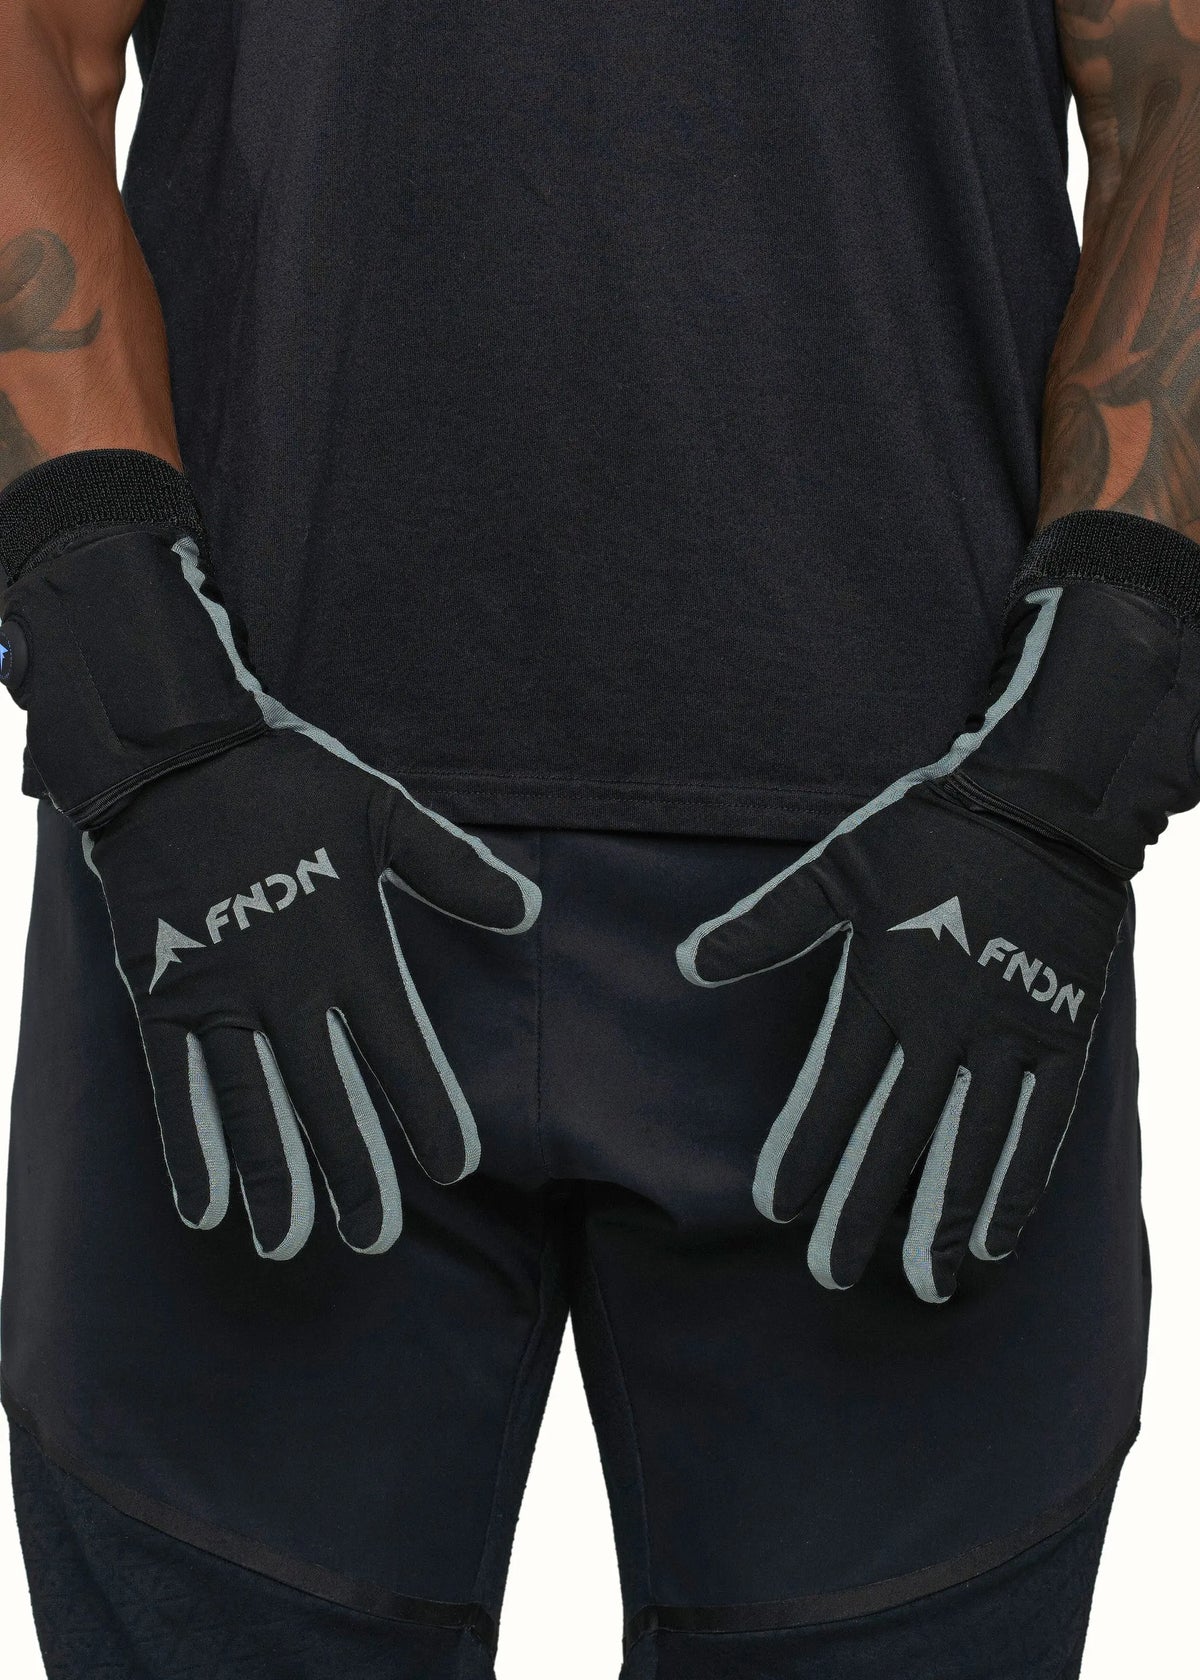 FNDN 3.7V Heated Liner Glove with Mitt